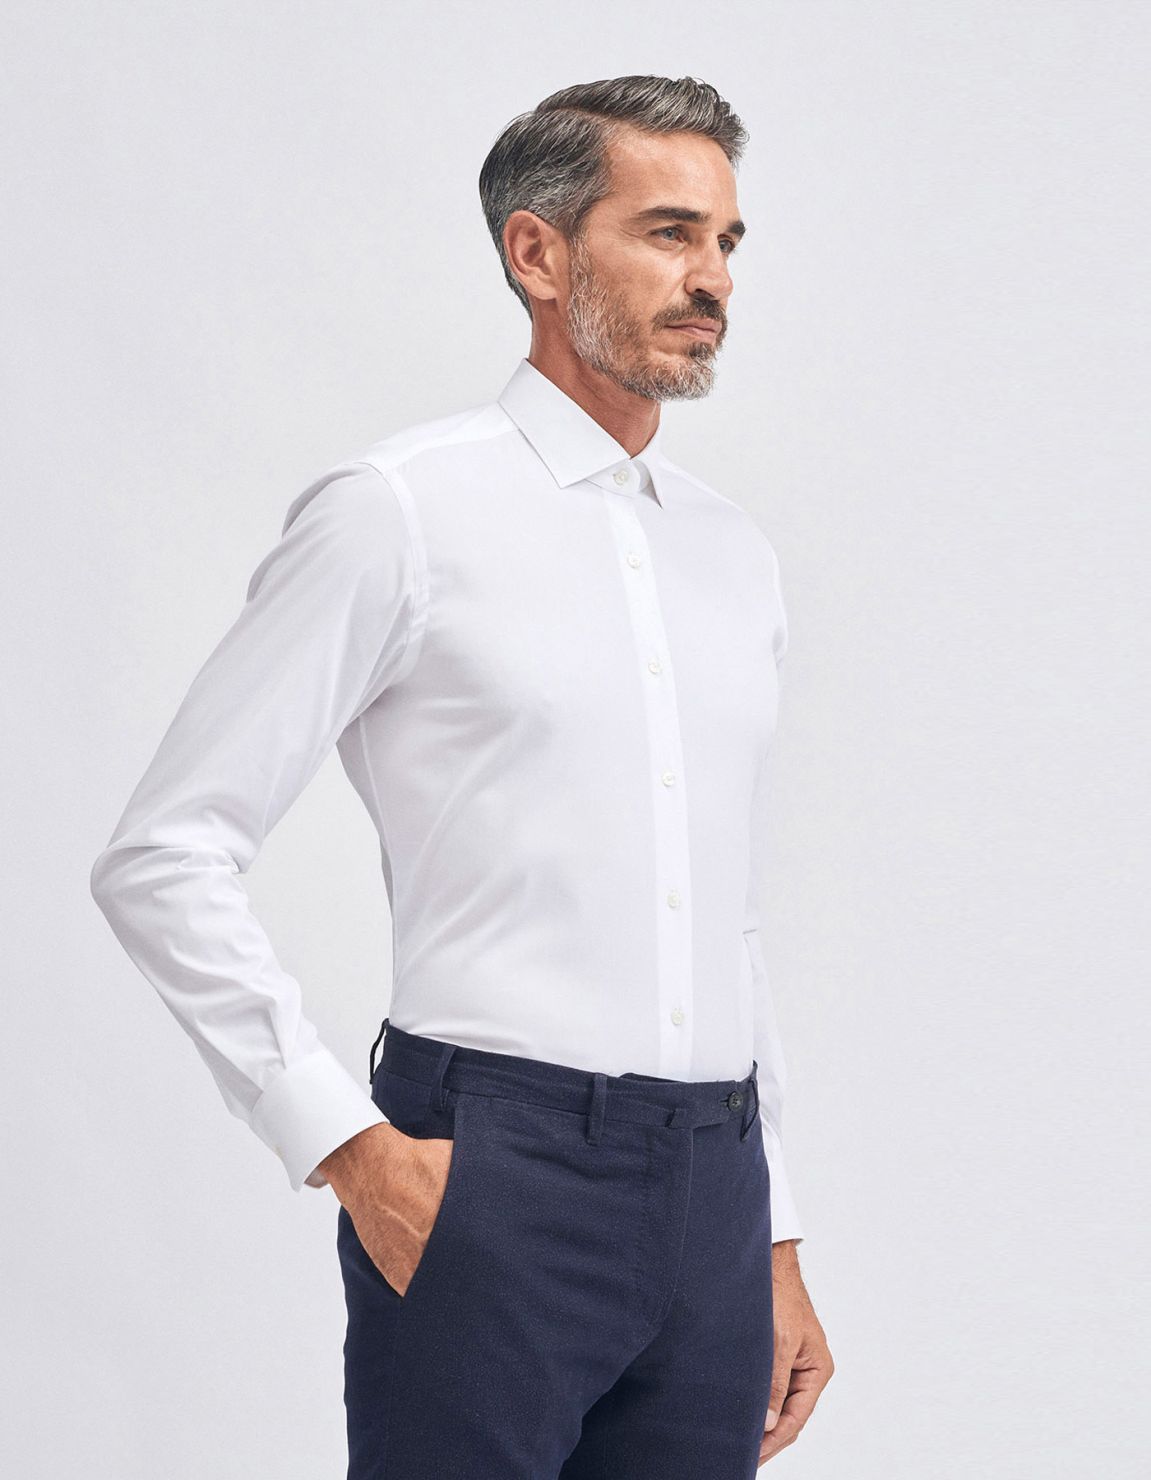 Shirt Collar small cutaway White Canvas Slim Fit 1